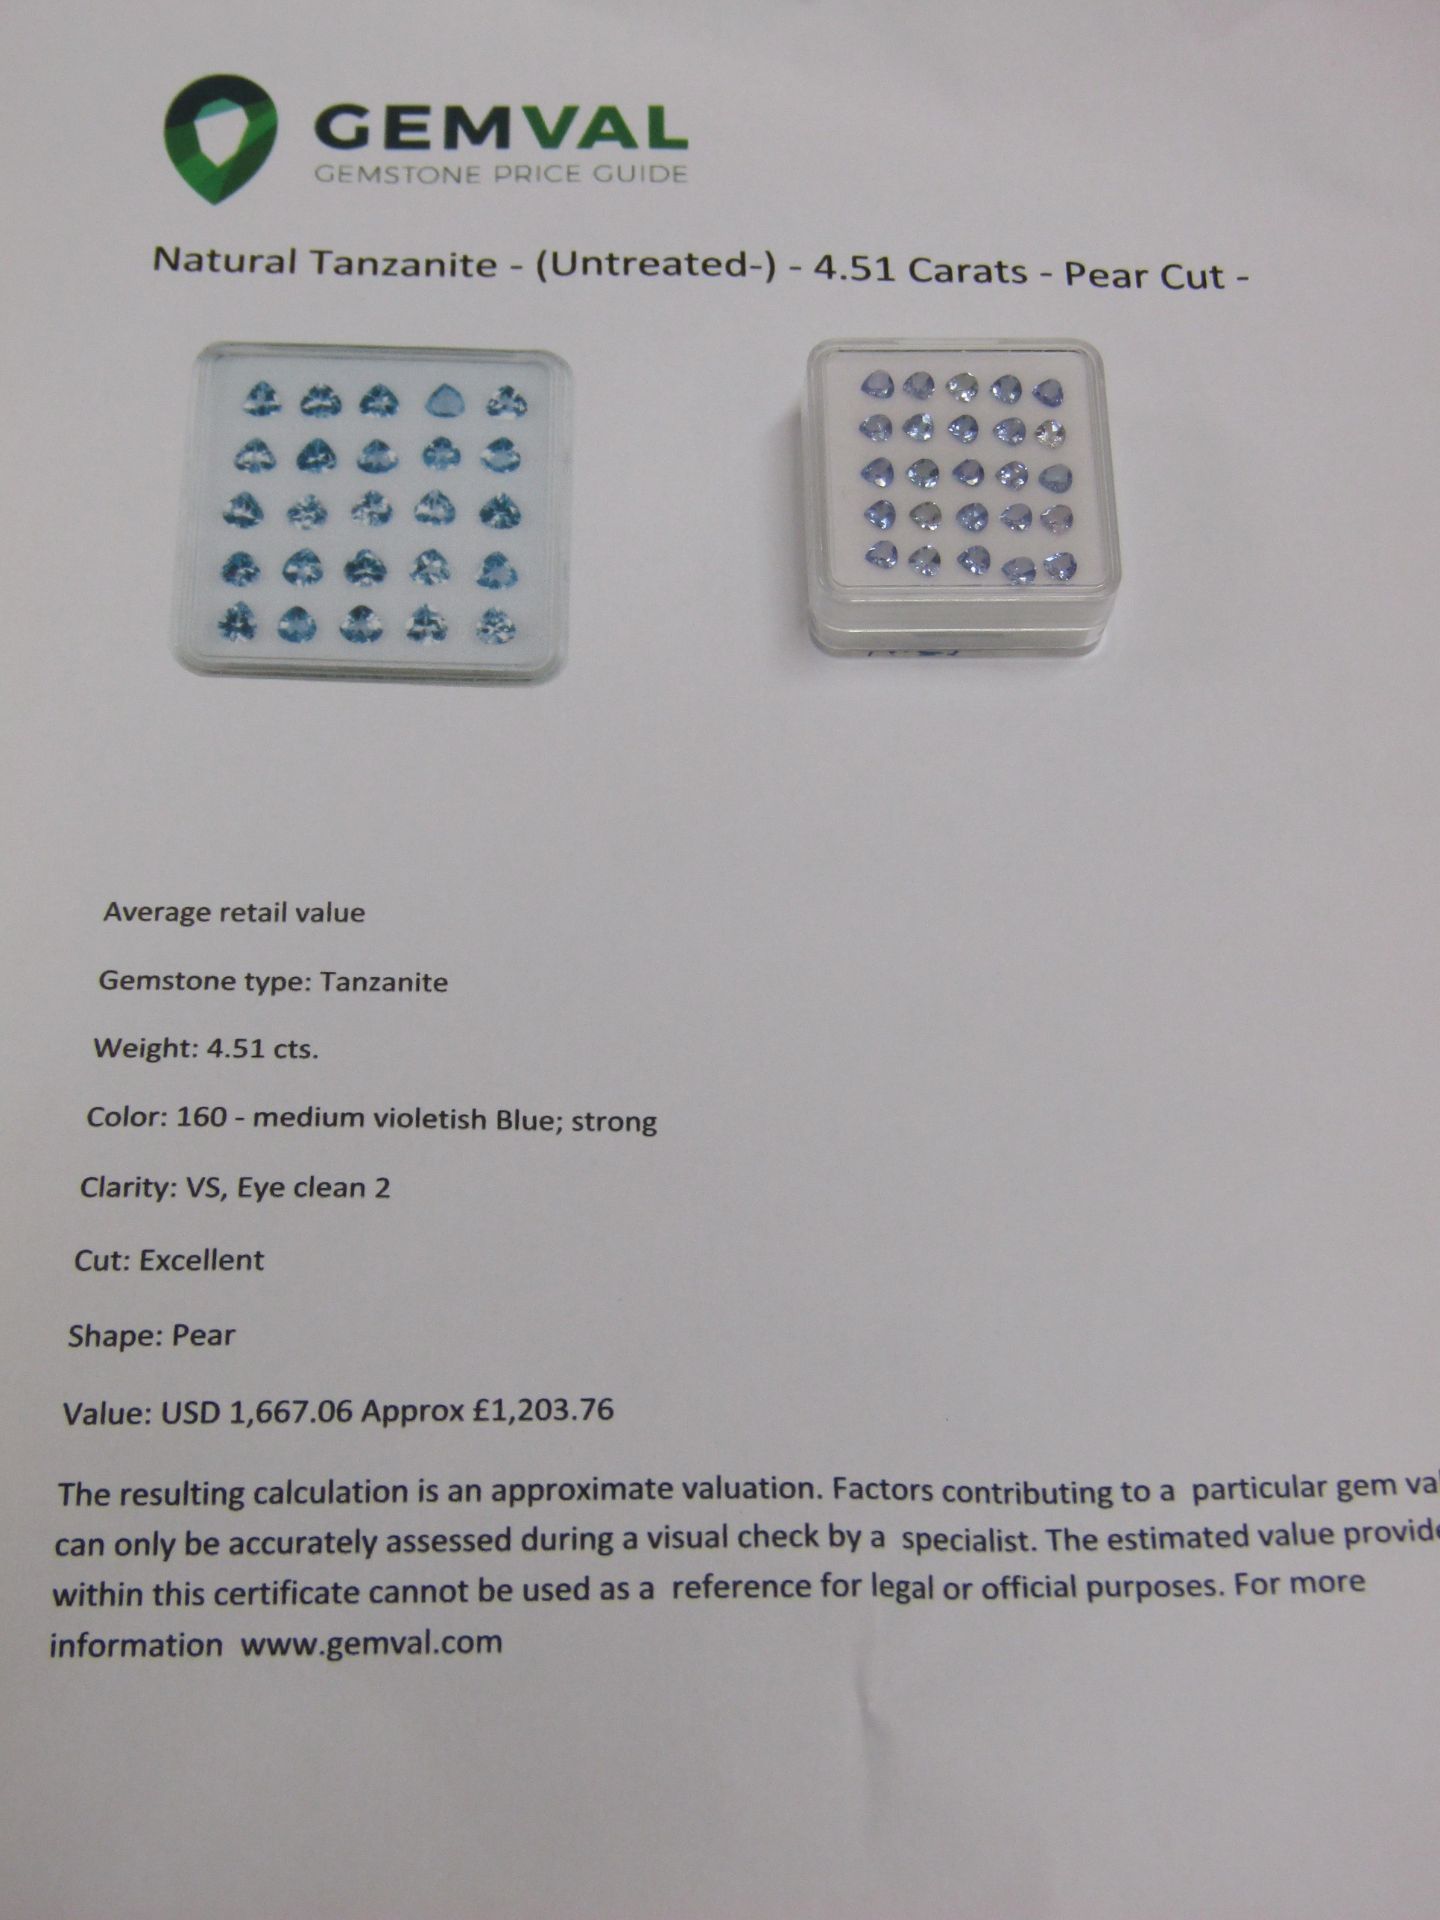 IGL&I Certified - Natural Tanzanite - 4.51 carats - 25 pieces - Pear cut - Average retail value £1,